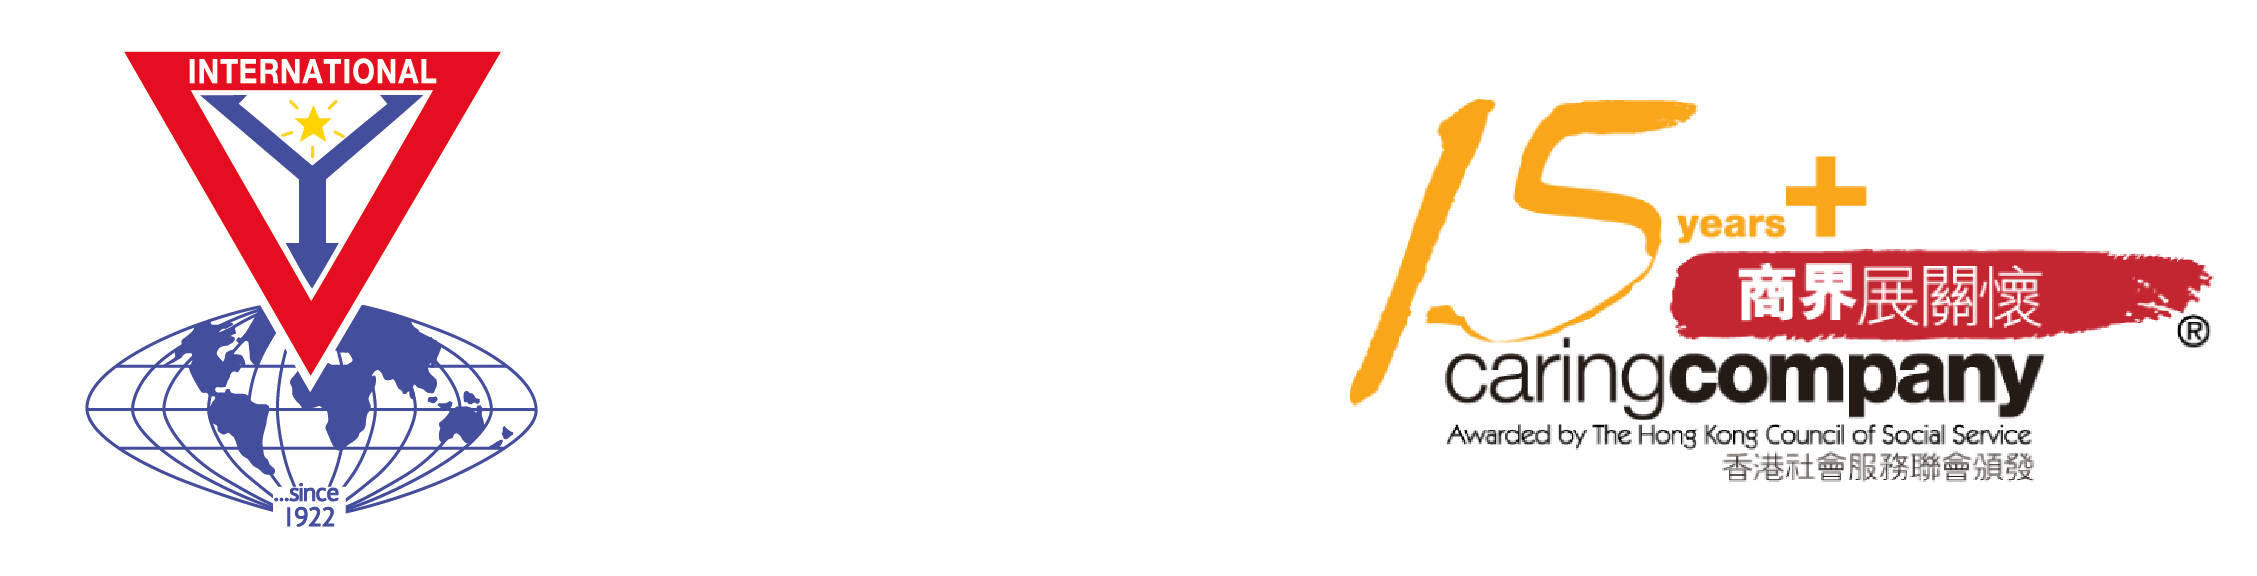 Y's Men International-Hong Kong District